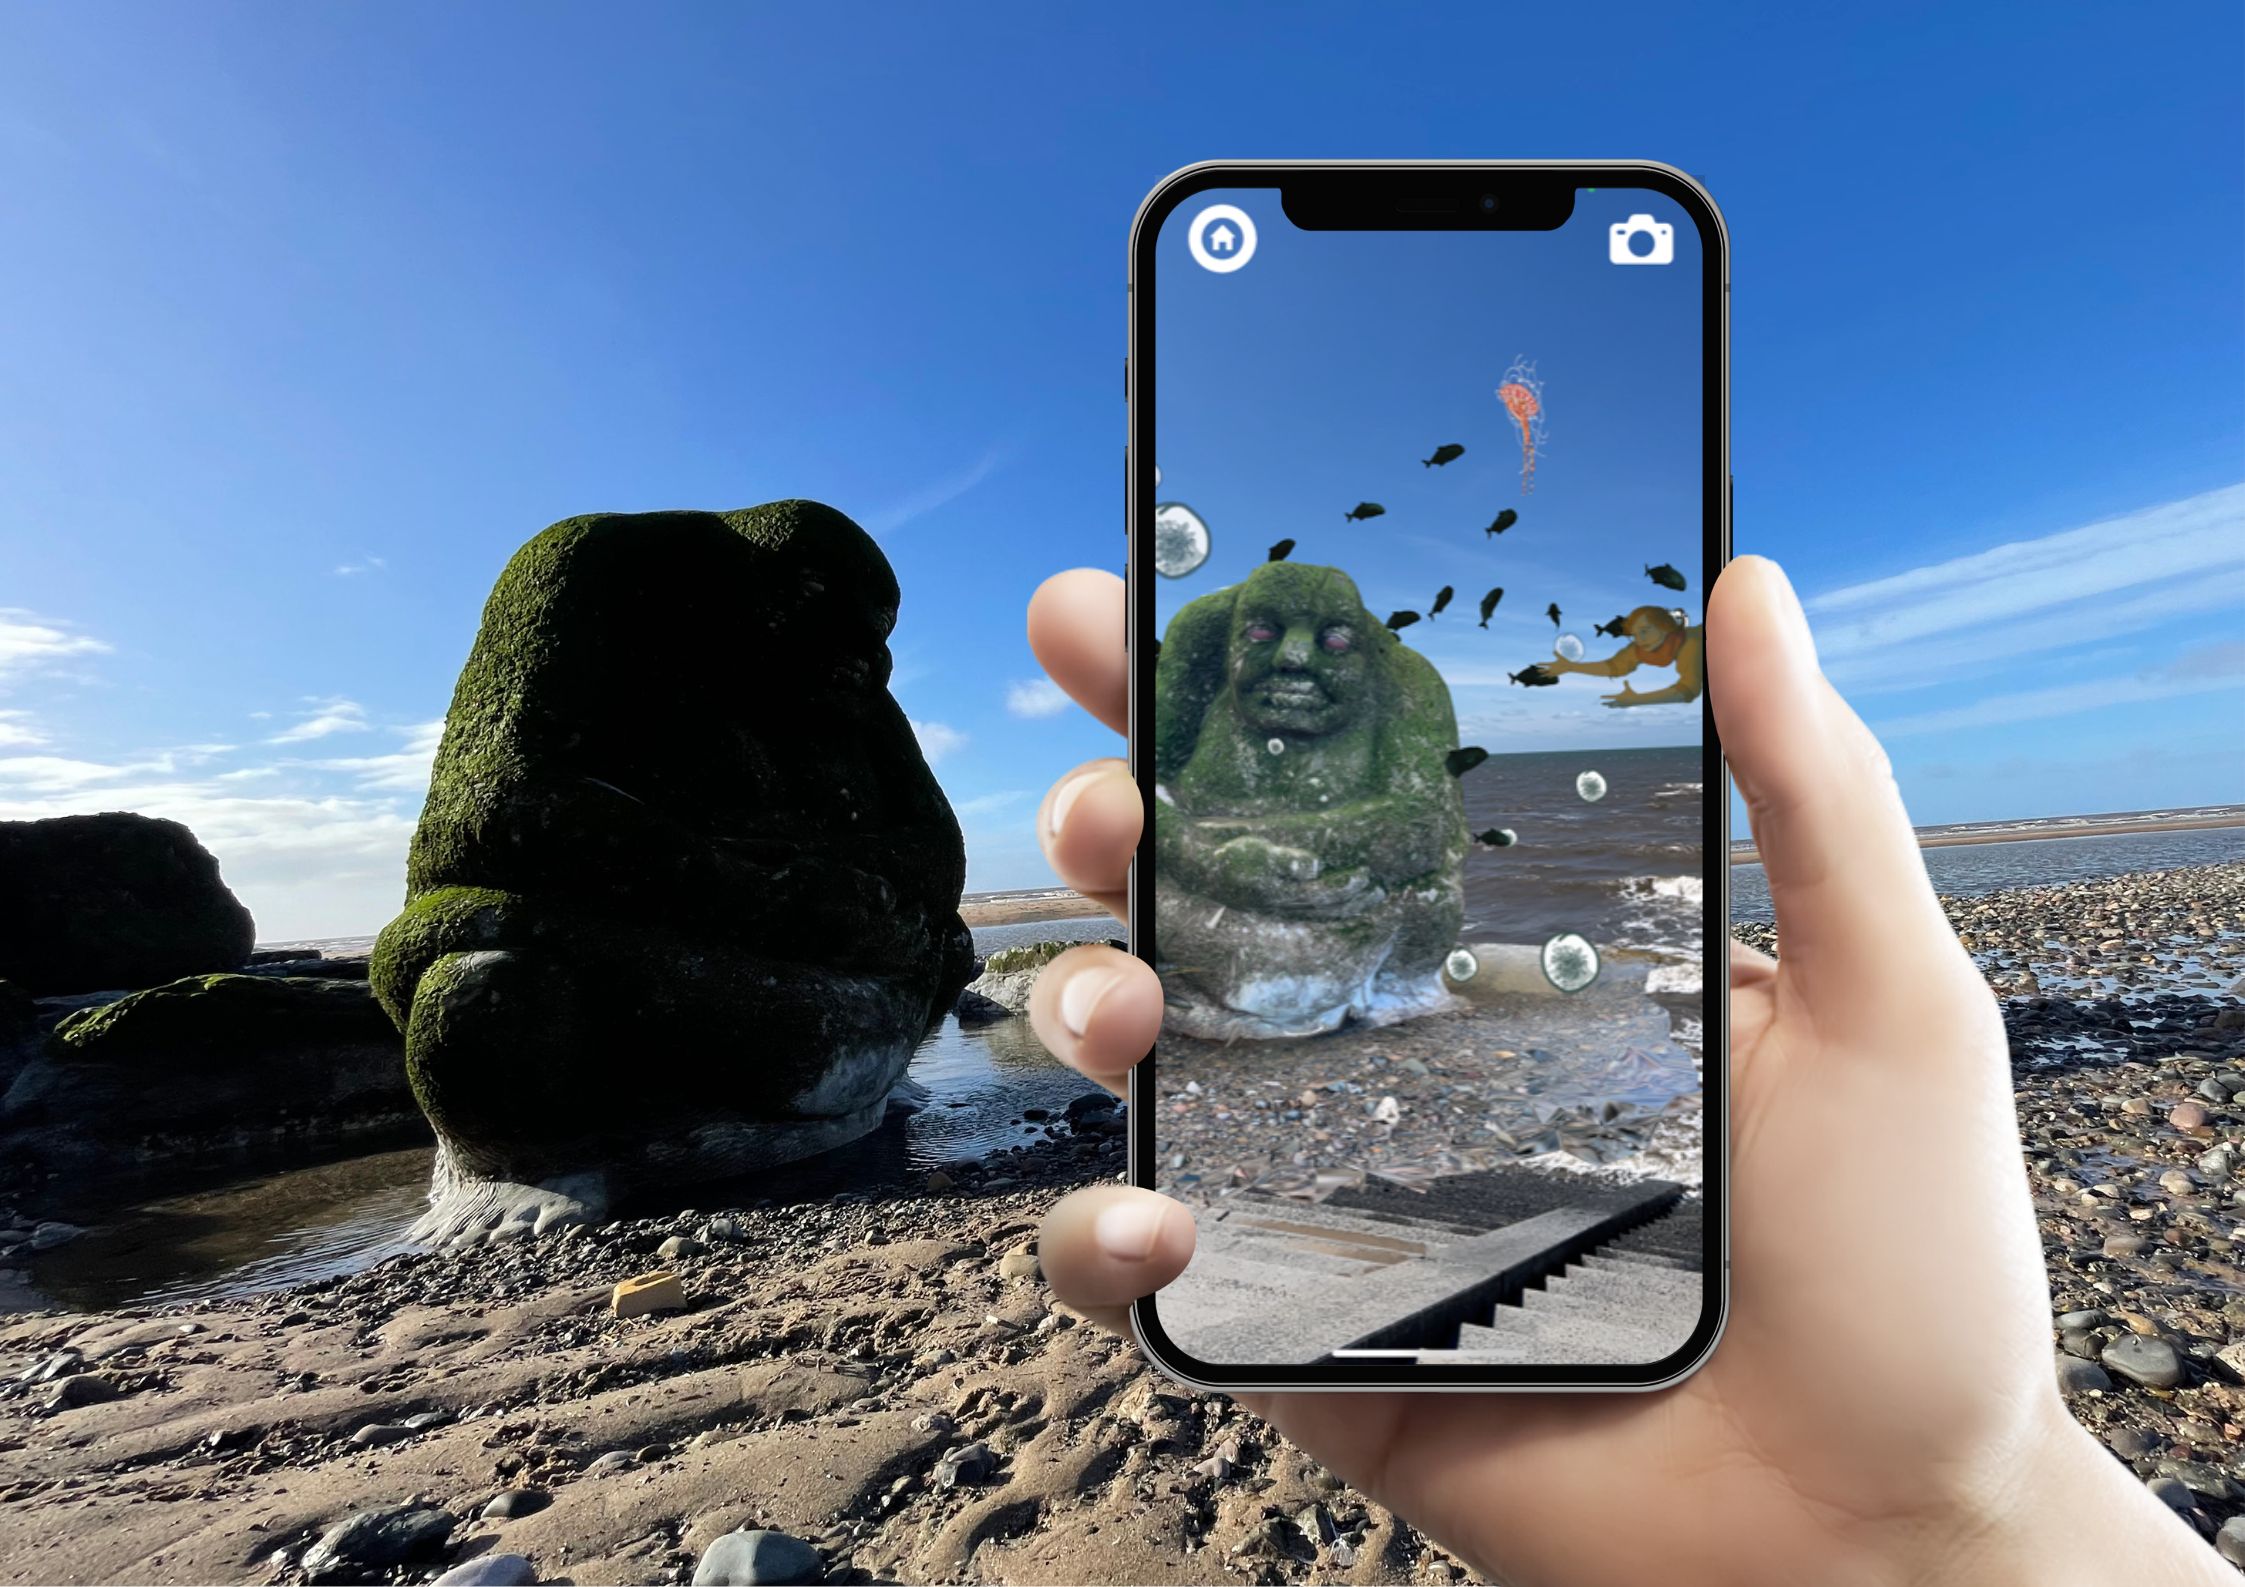 hand holding phone over ogre on beach